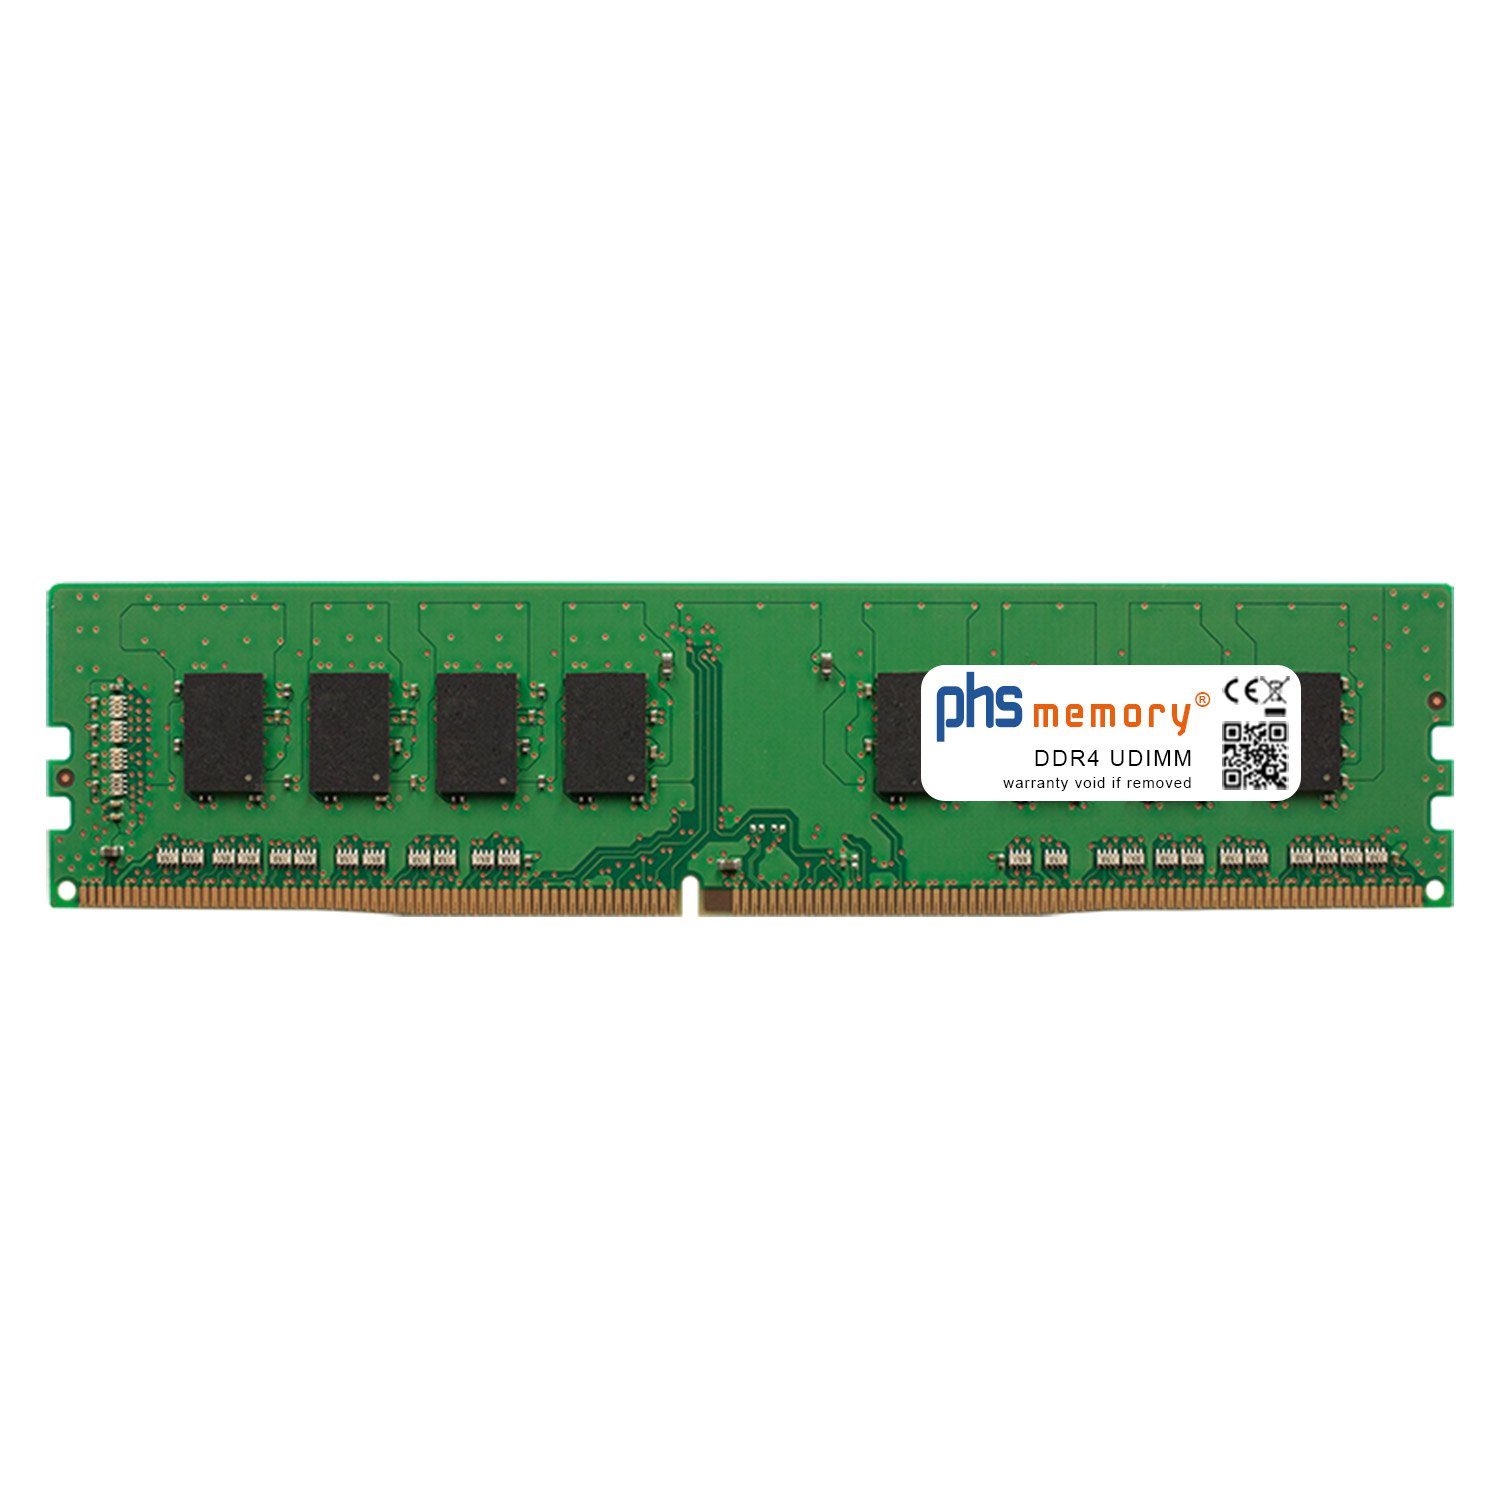 PHS-memory RAM für Captiva Power Starter I67-987 Arbeitsspeicher